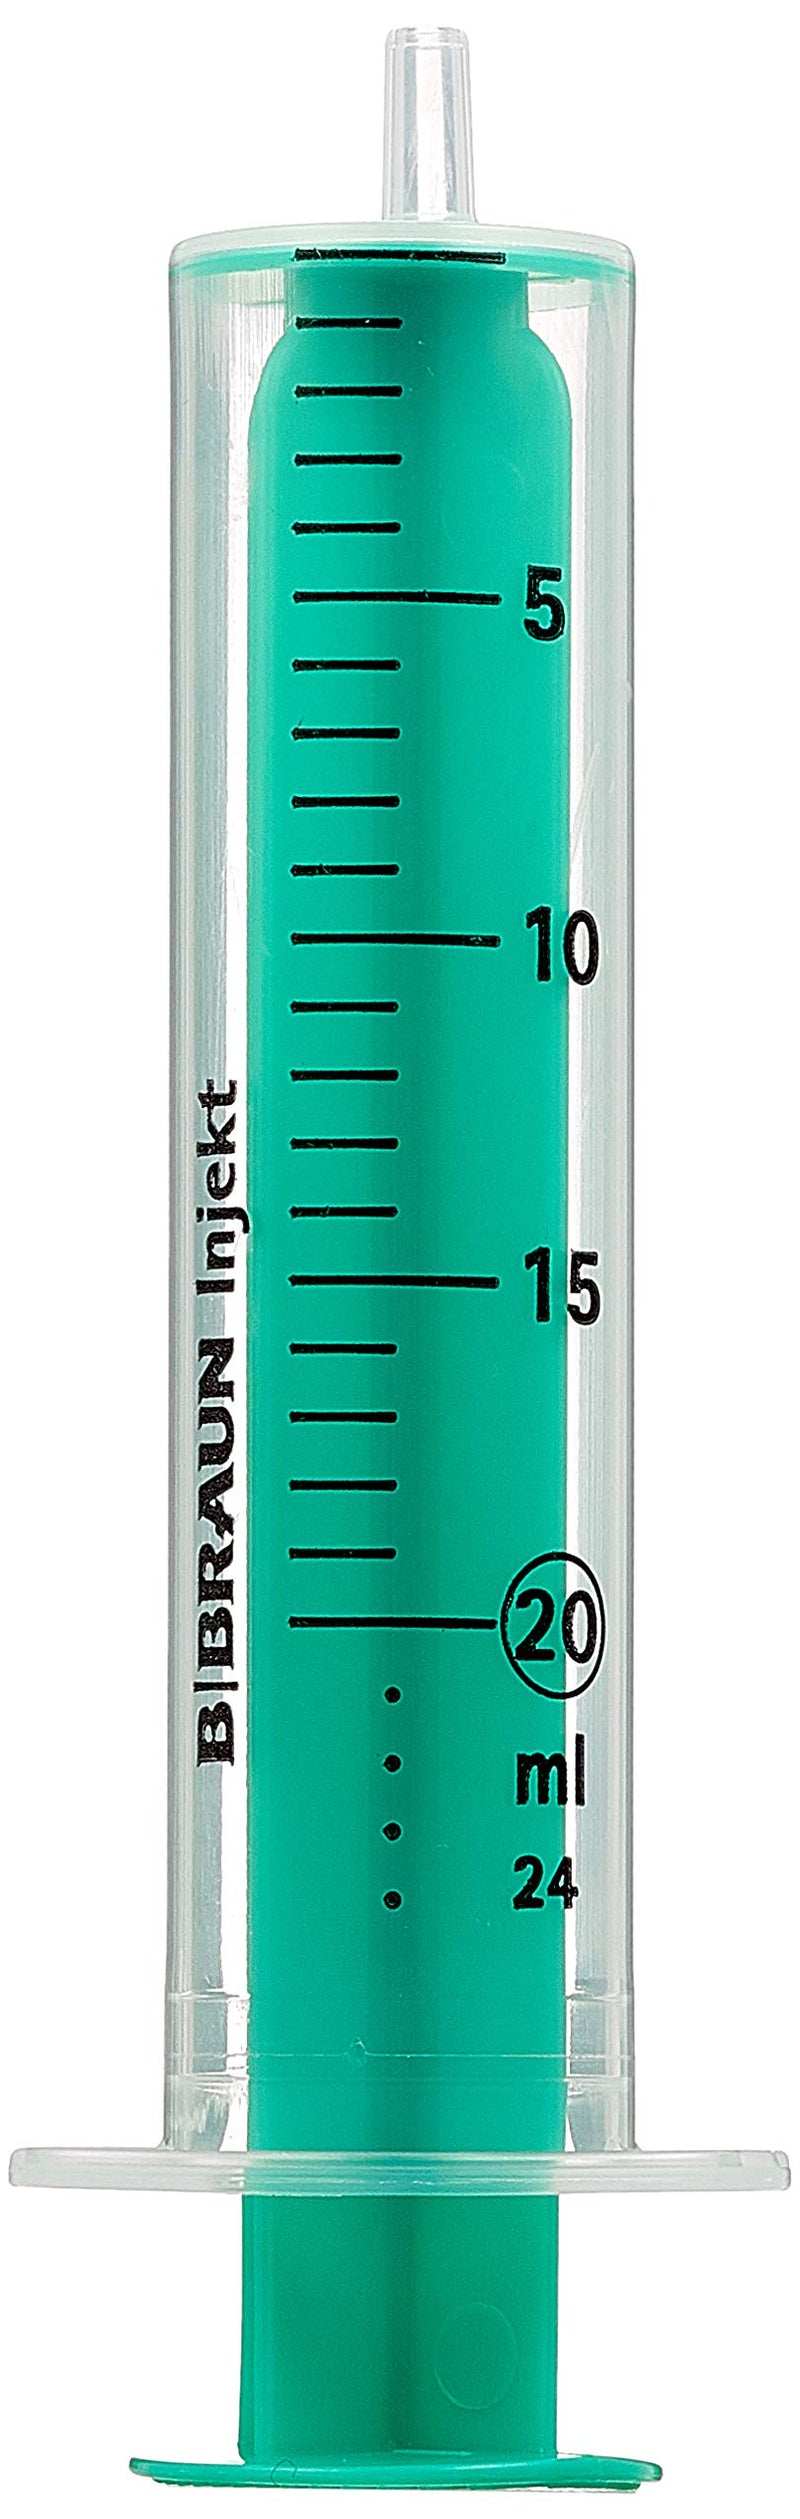  [AUSTRALIA] - Braun Petzold 4606205V Inject disposable syringe with green piston rod, dispenser box, 20 mL (pack of 100) single pack